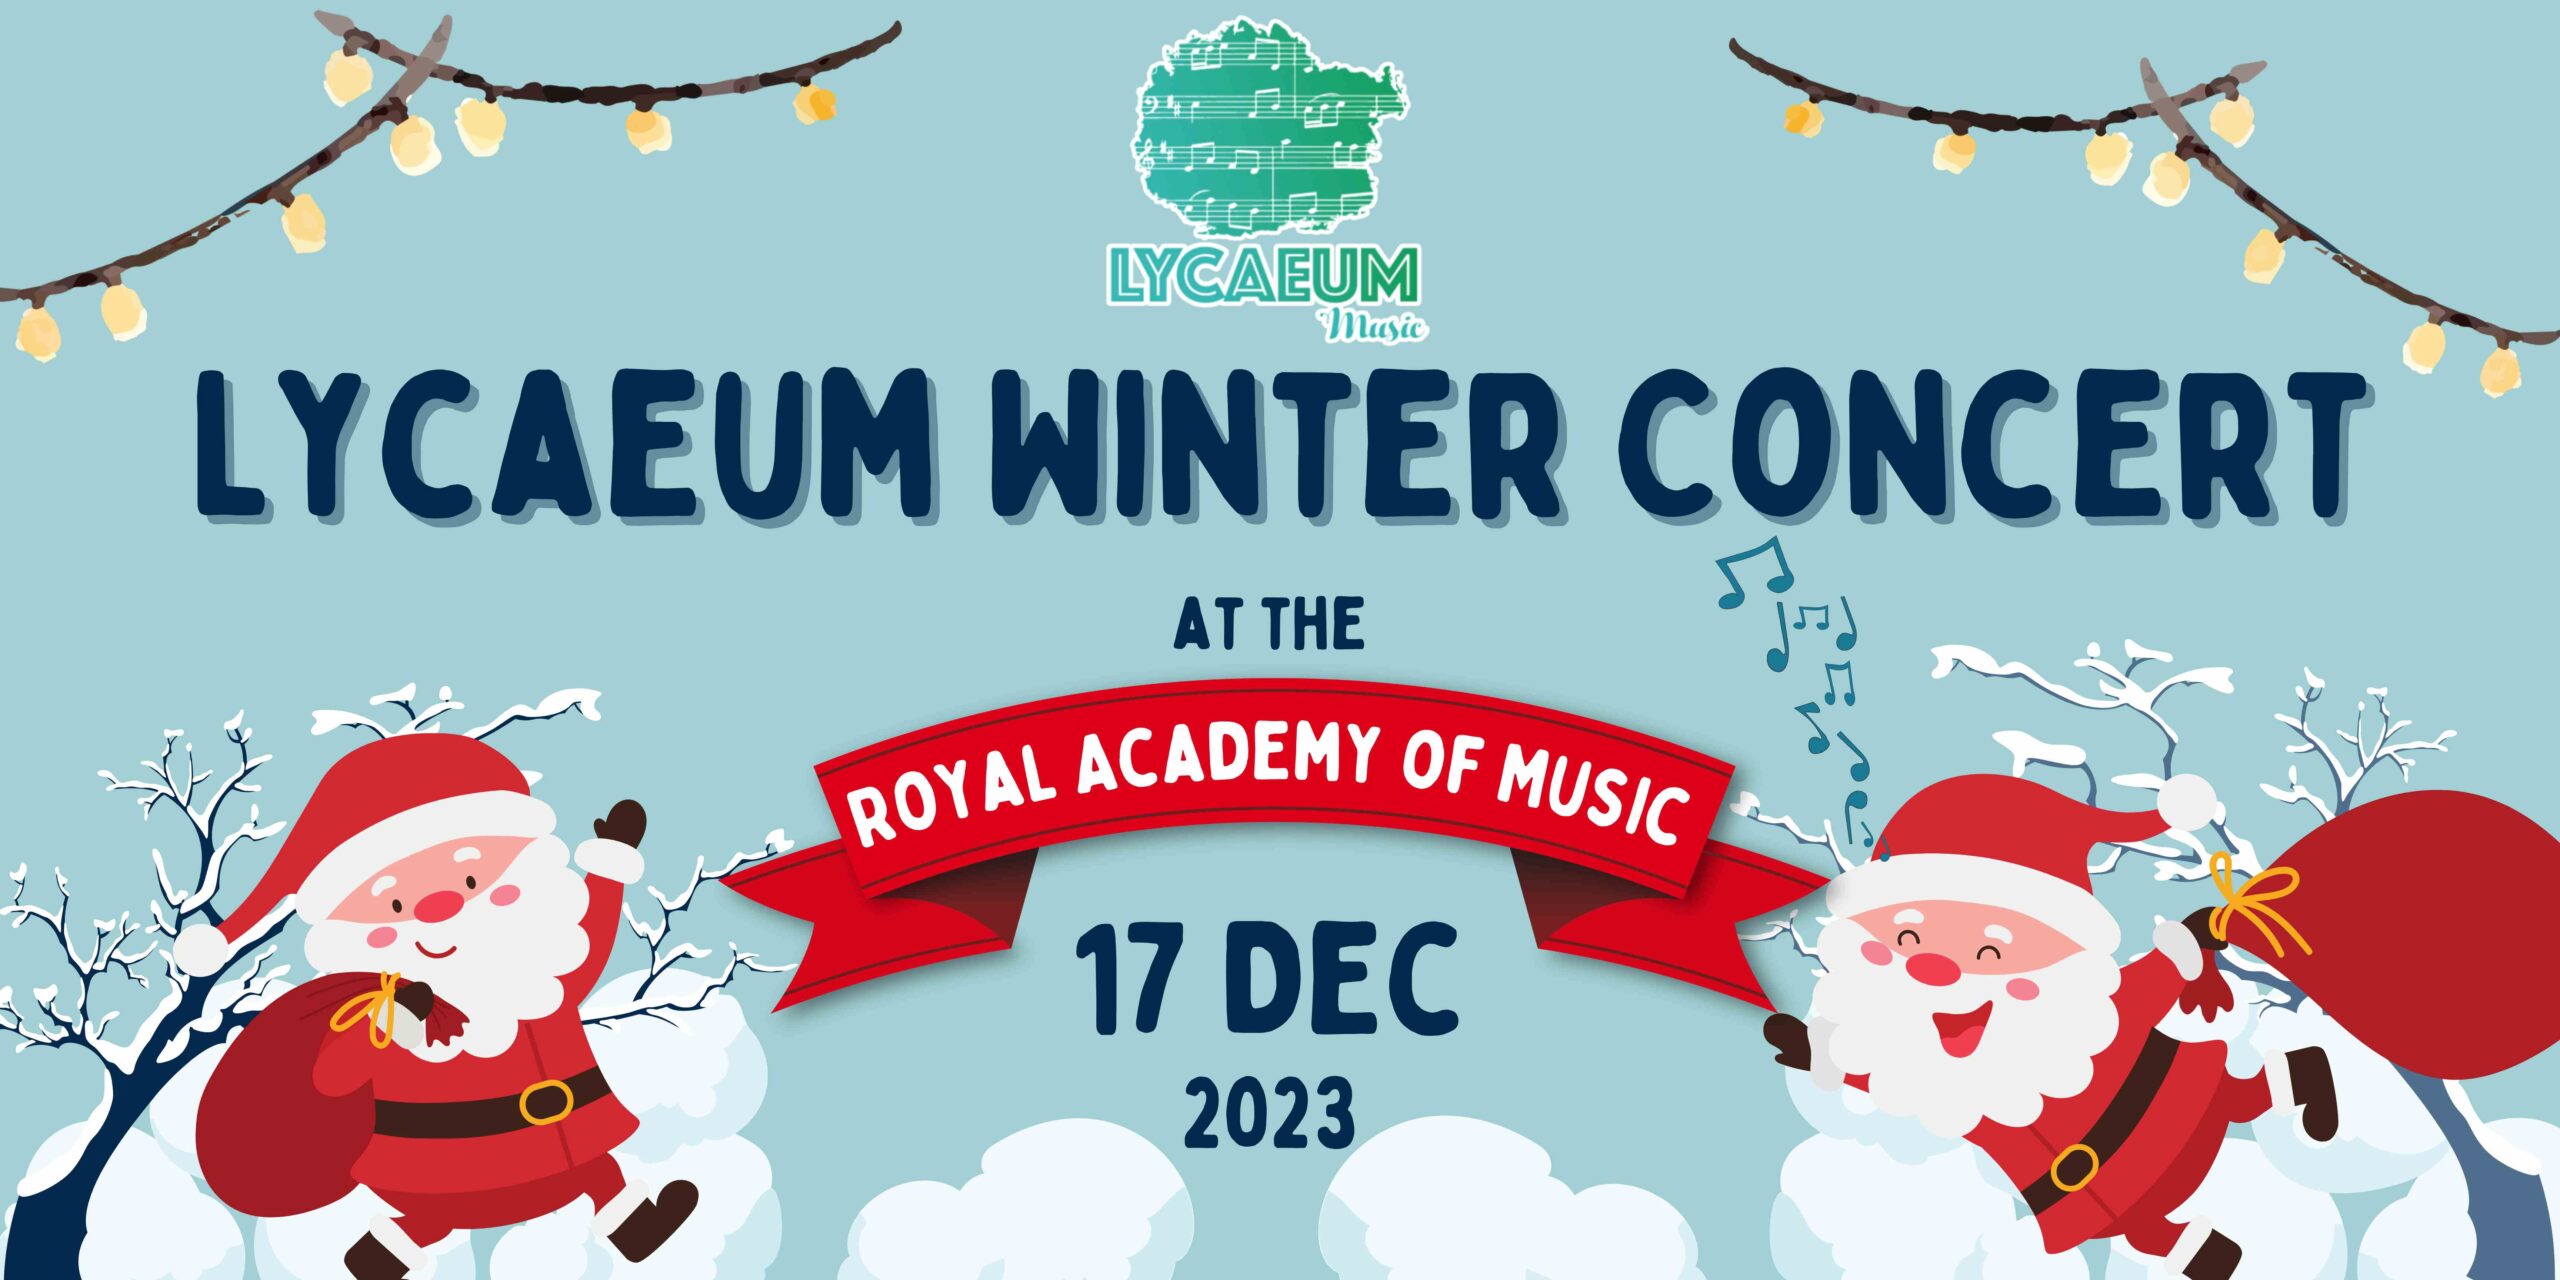 lycaeum winter concert